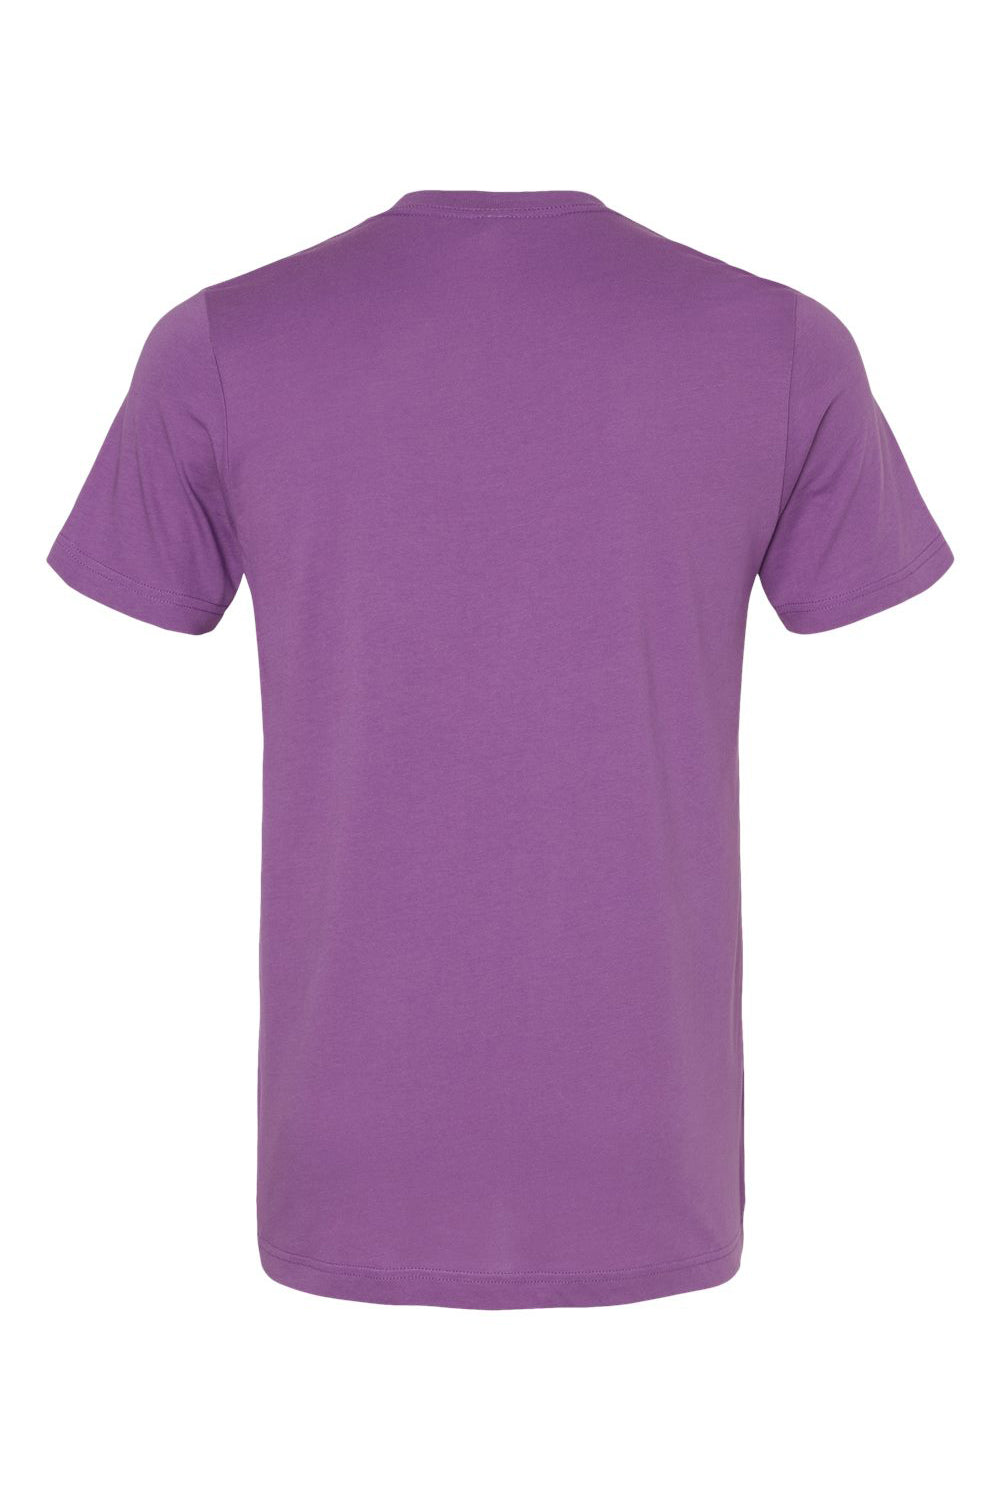 Bella + Canvas BC3001/3001C Mens Jersey Short Sleeve Crewneck T-Shirt Royal Purple Flat Back